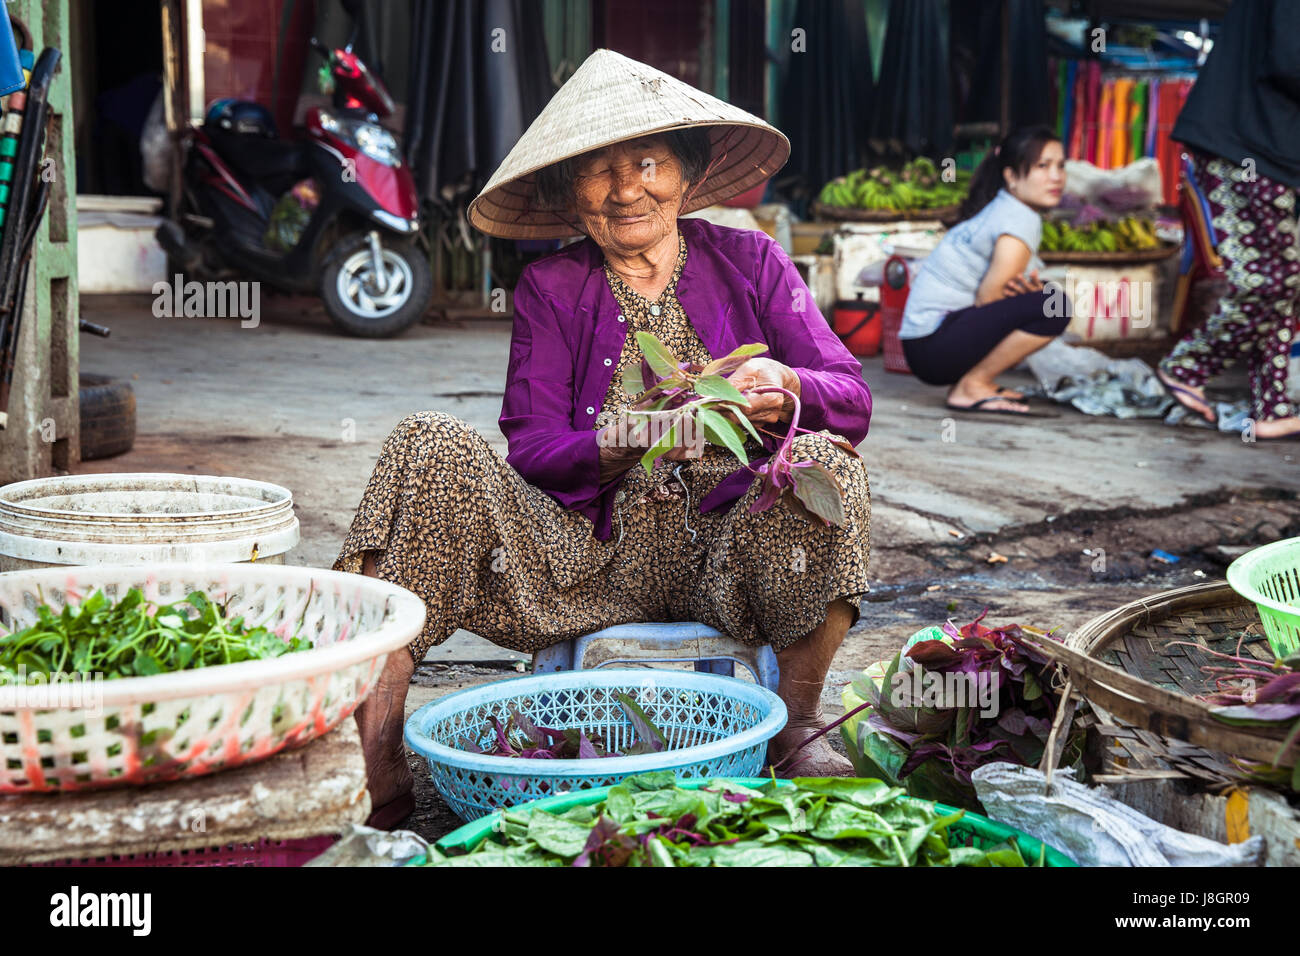 Nha Trang, Vietnam - December 02, 2015: Old vietnamese woman is cutting greens at the street market, Nha Trang, Vietnam on December 02, 2015. Stock Photo